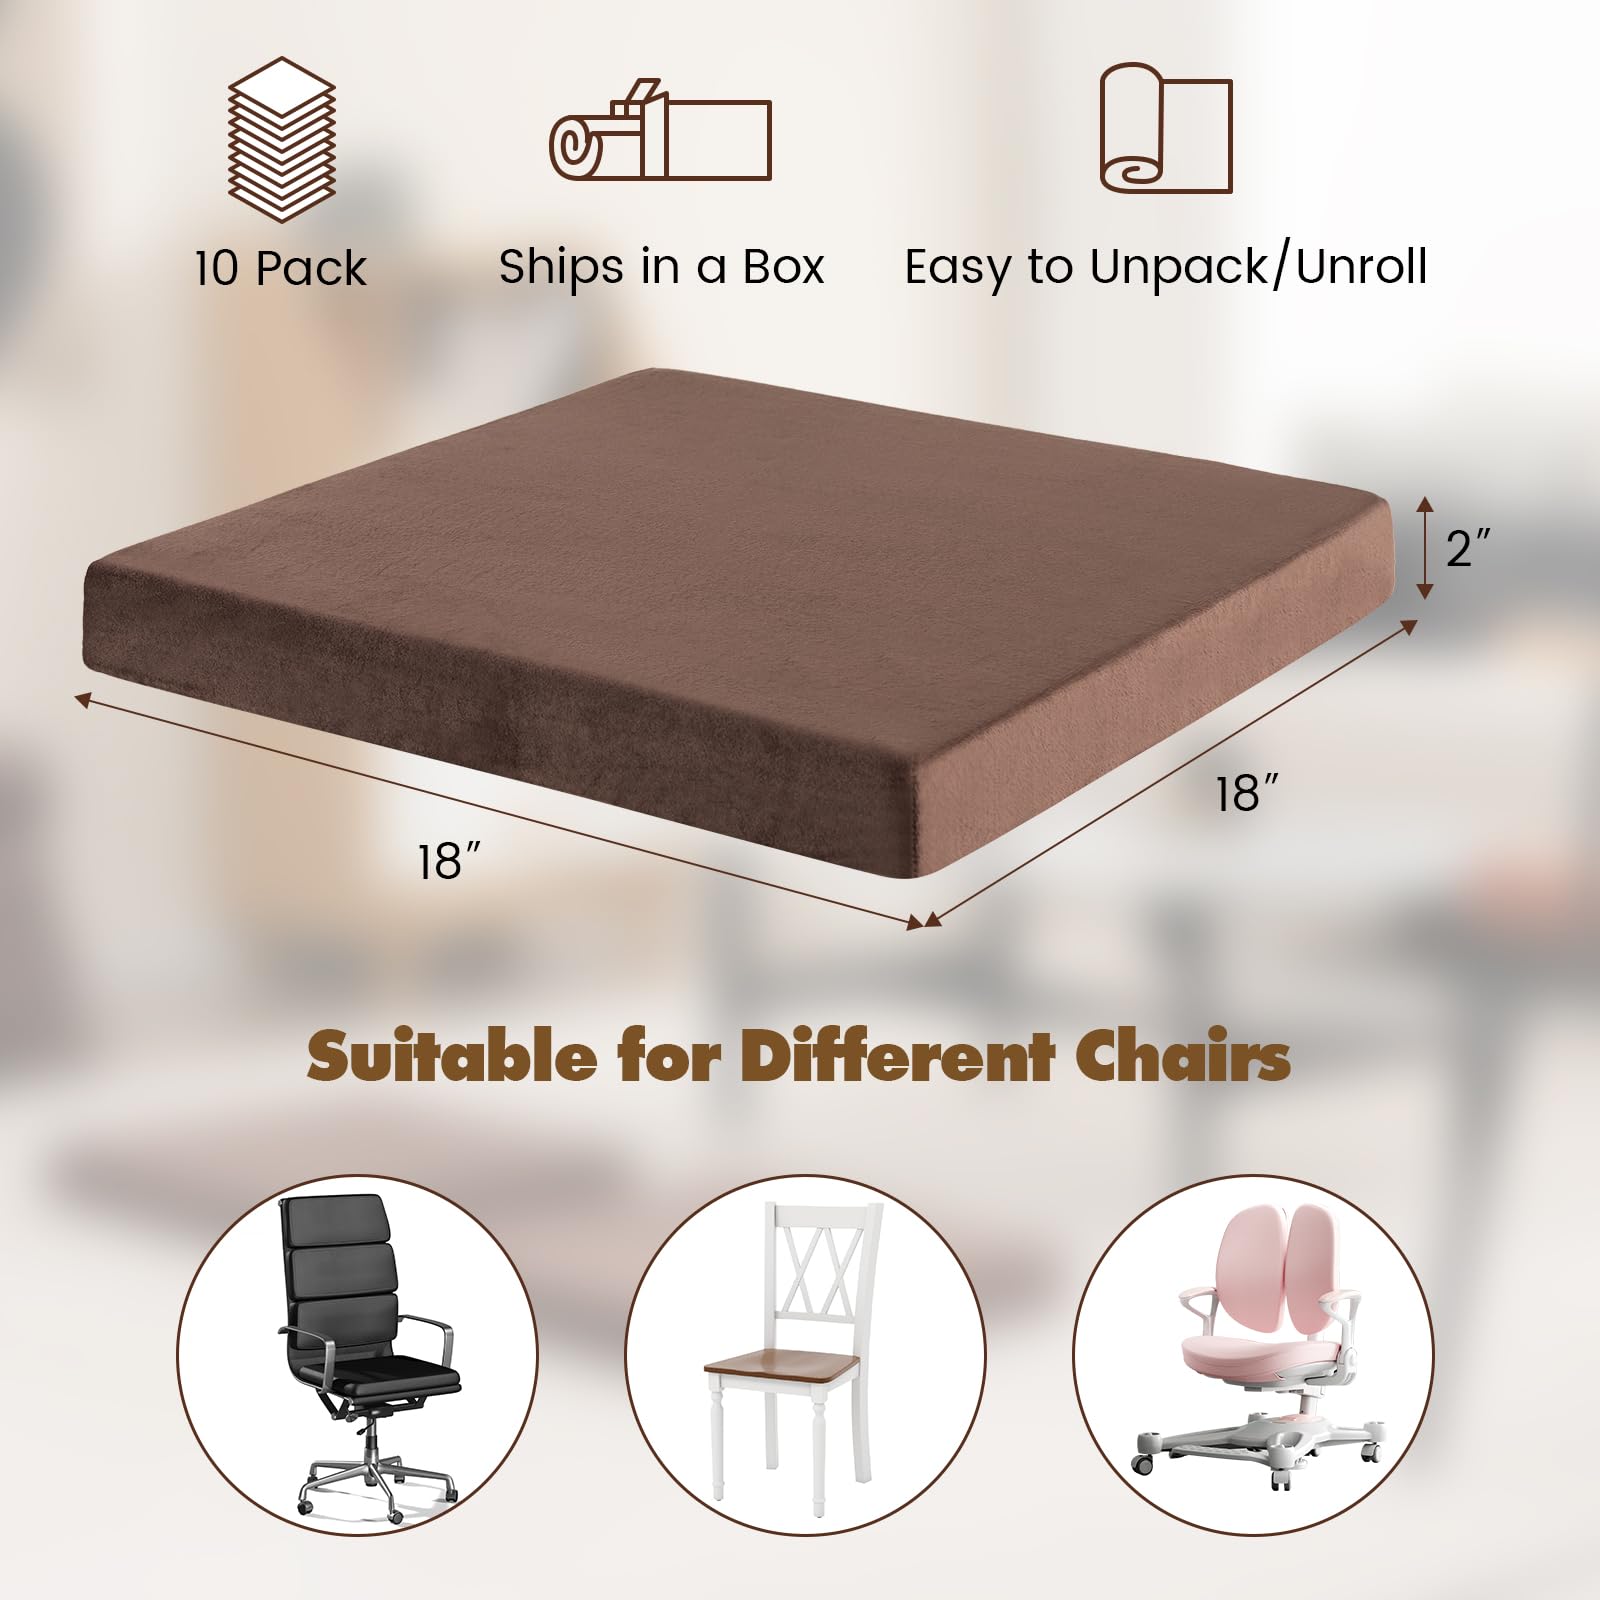 Giantex 10 Pack Gel Memory Foam Chair Cushions, 18" x 18" x 2" Square Floor Seat Cushions